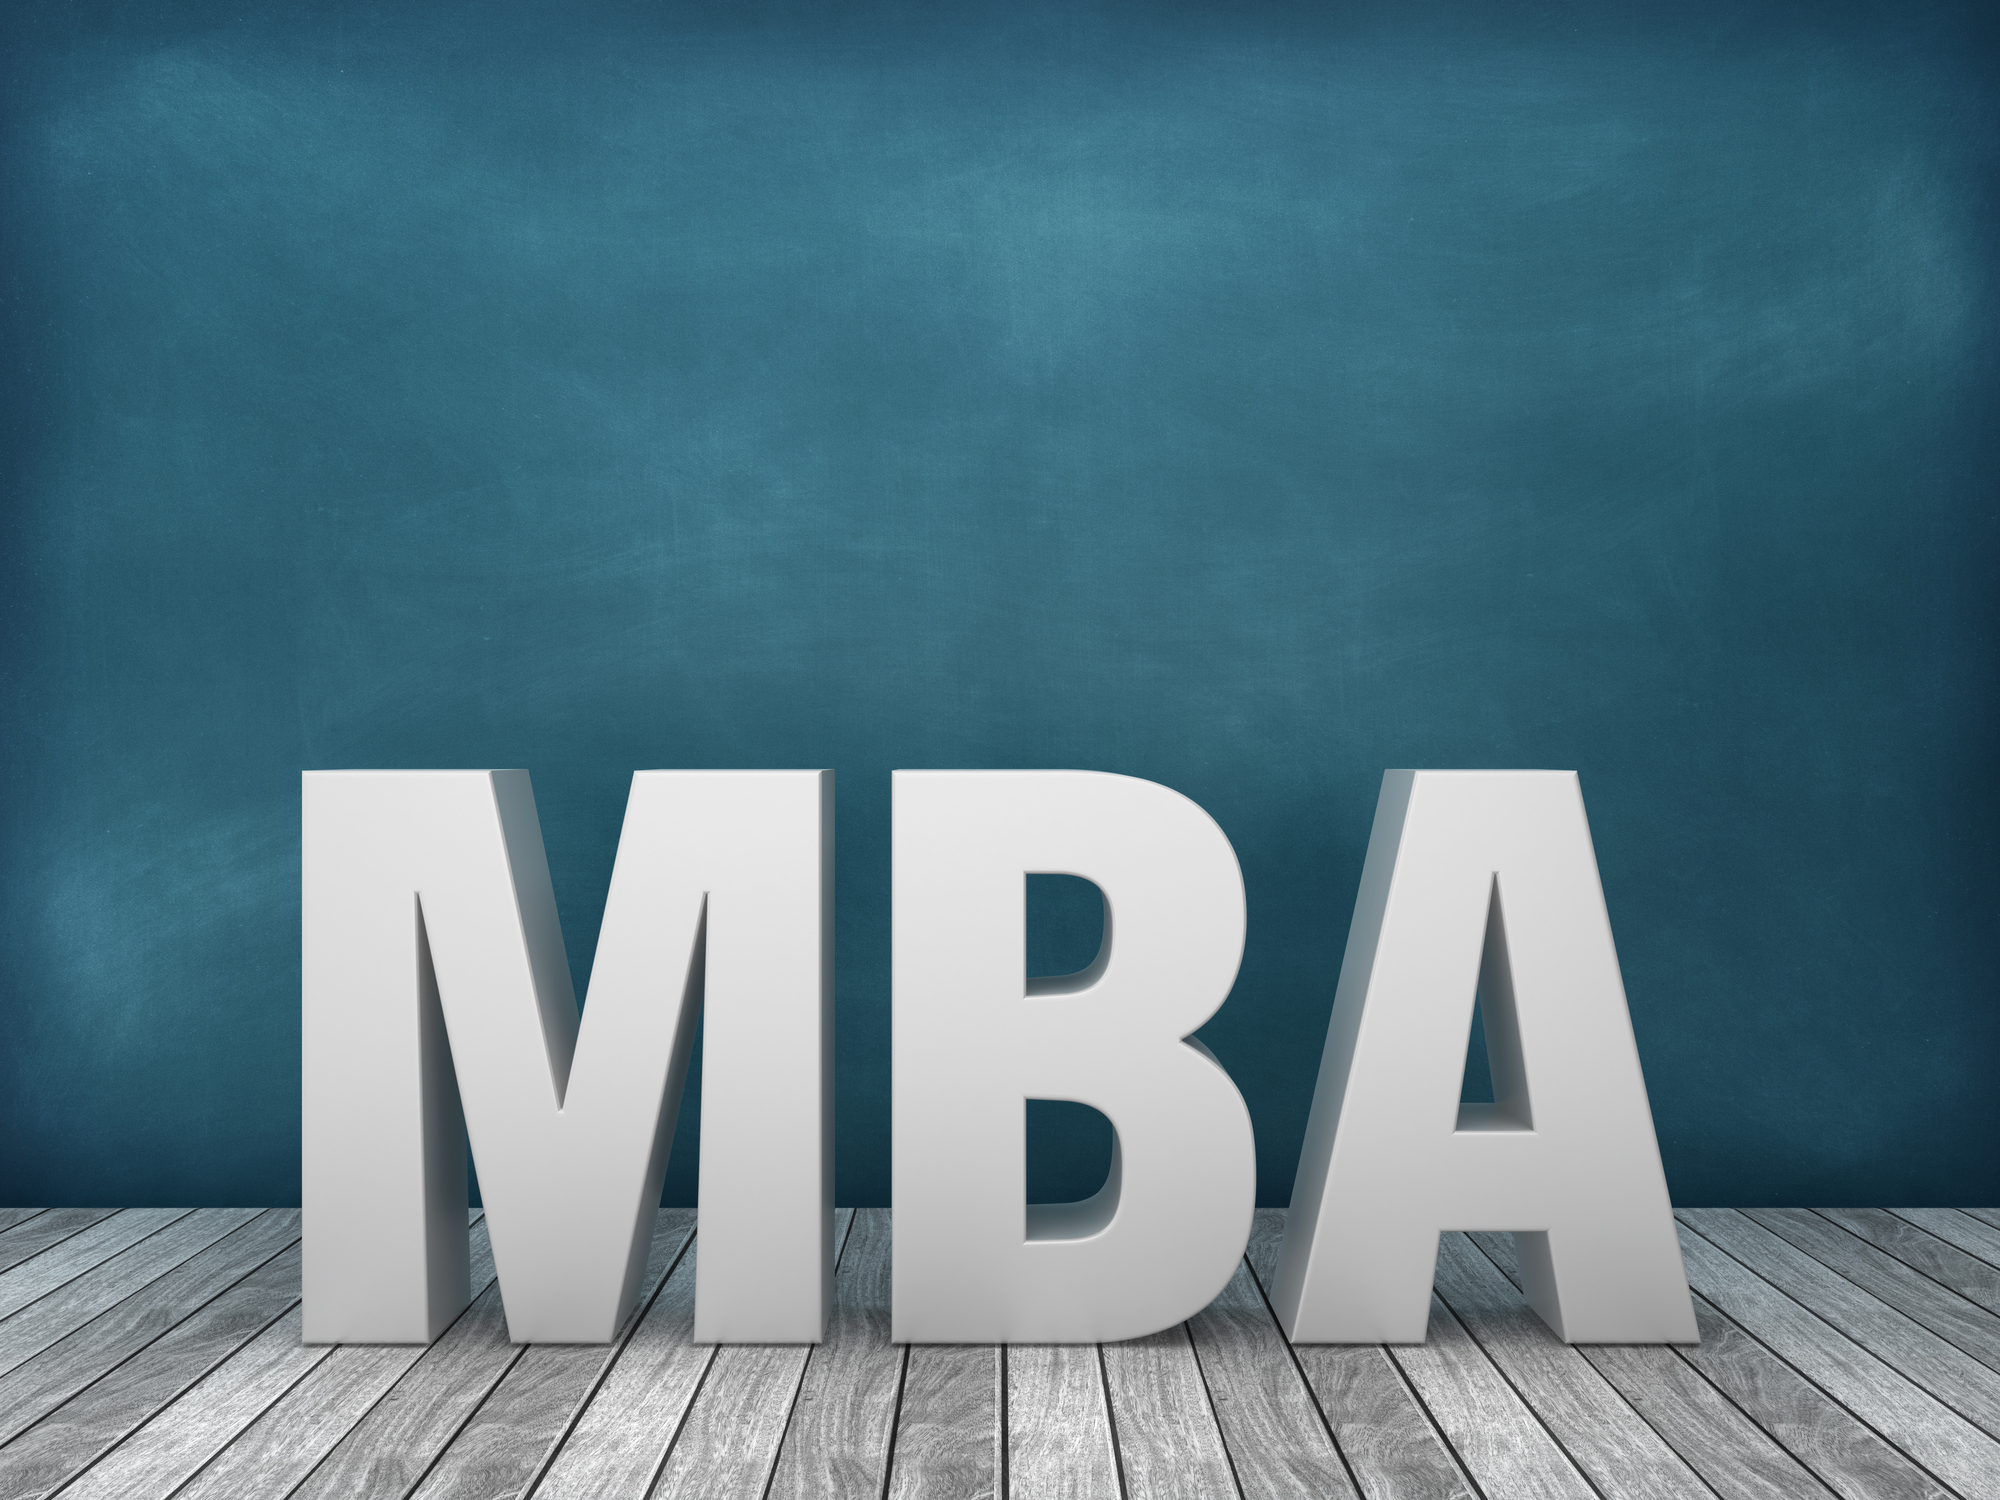 Обучение мба. MBA образование. MBA В картинках. Значок MBA. Курсы MBA.